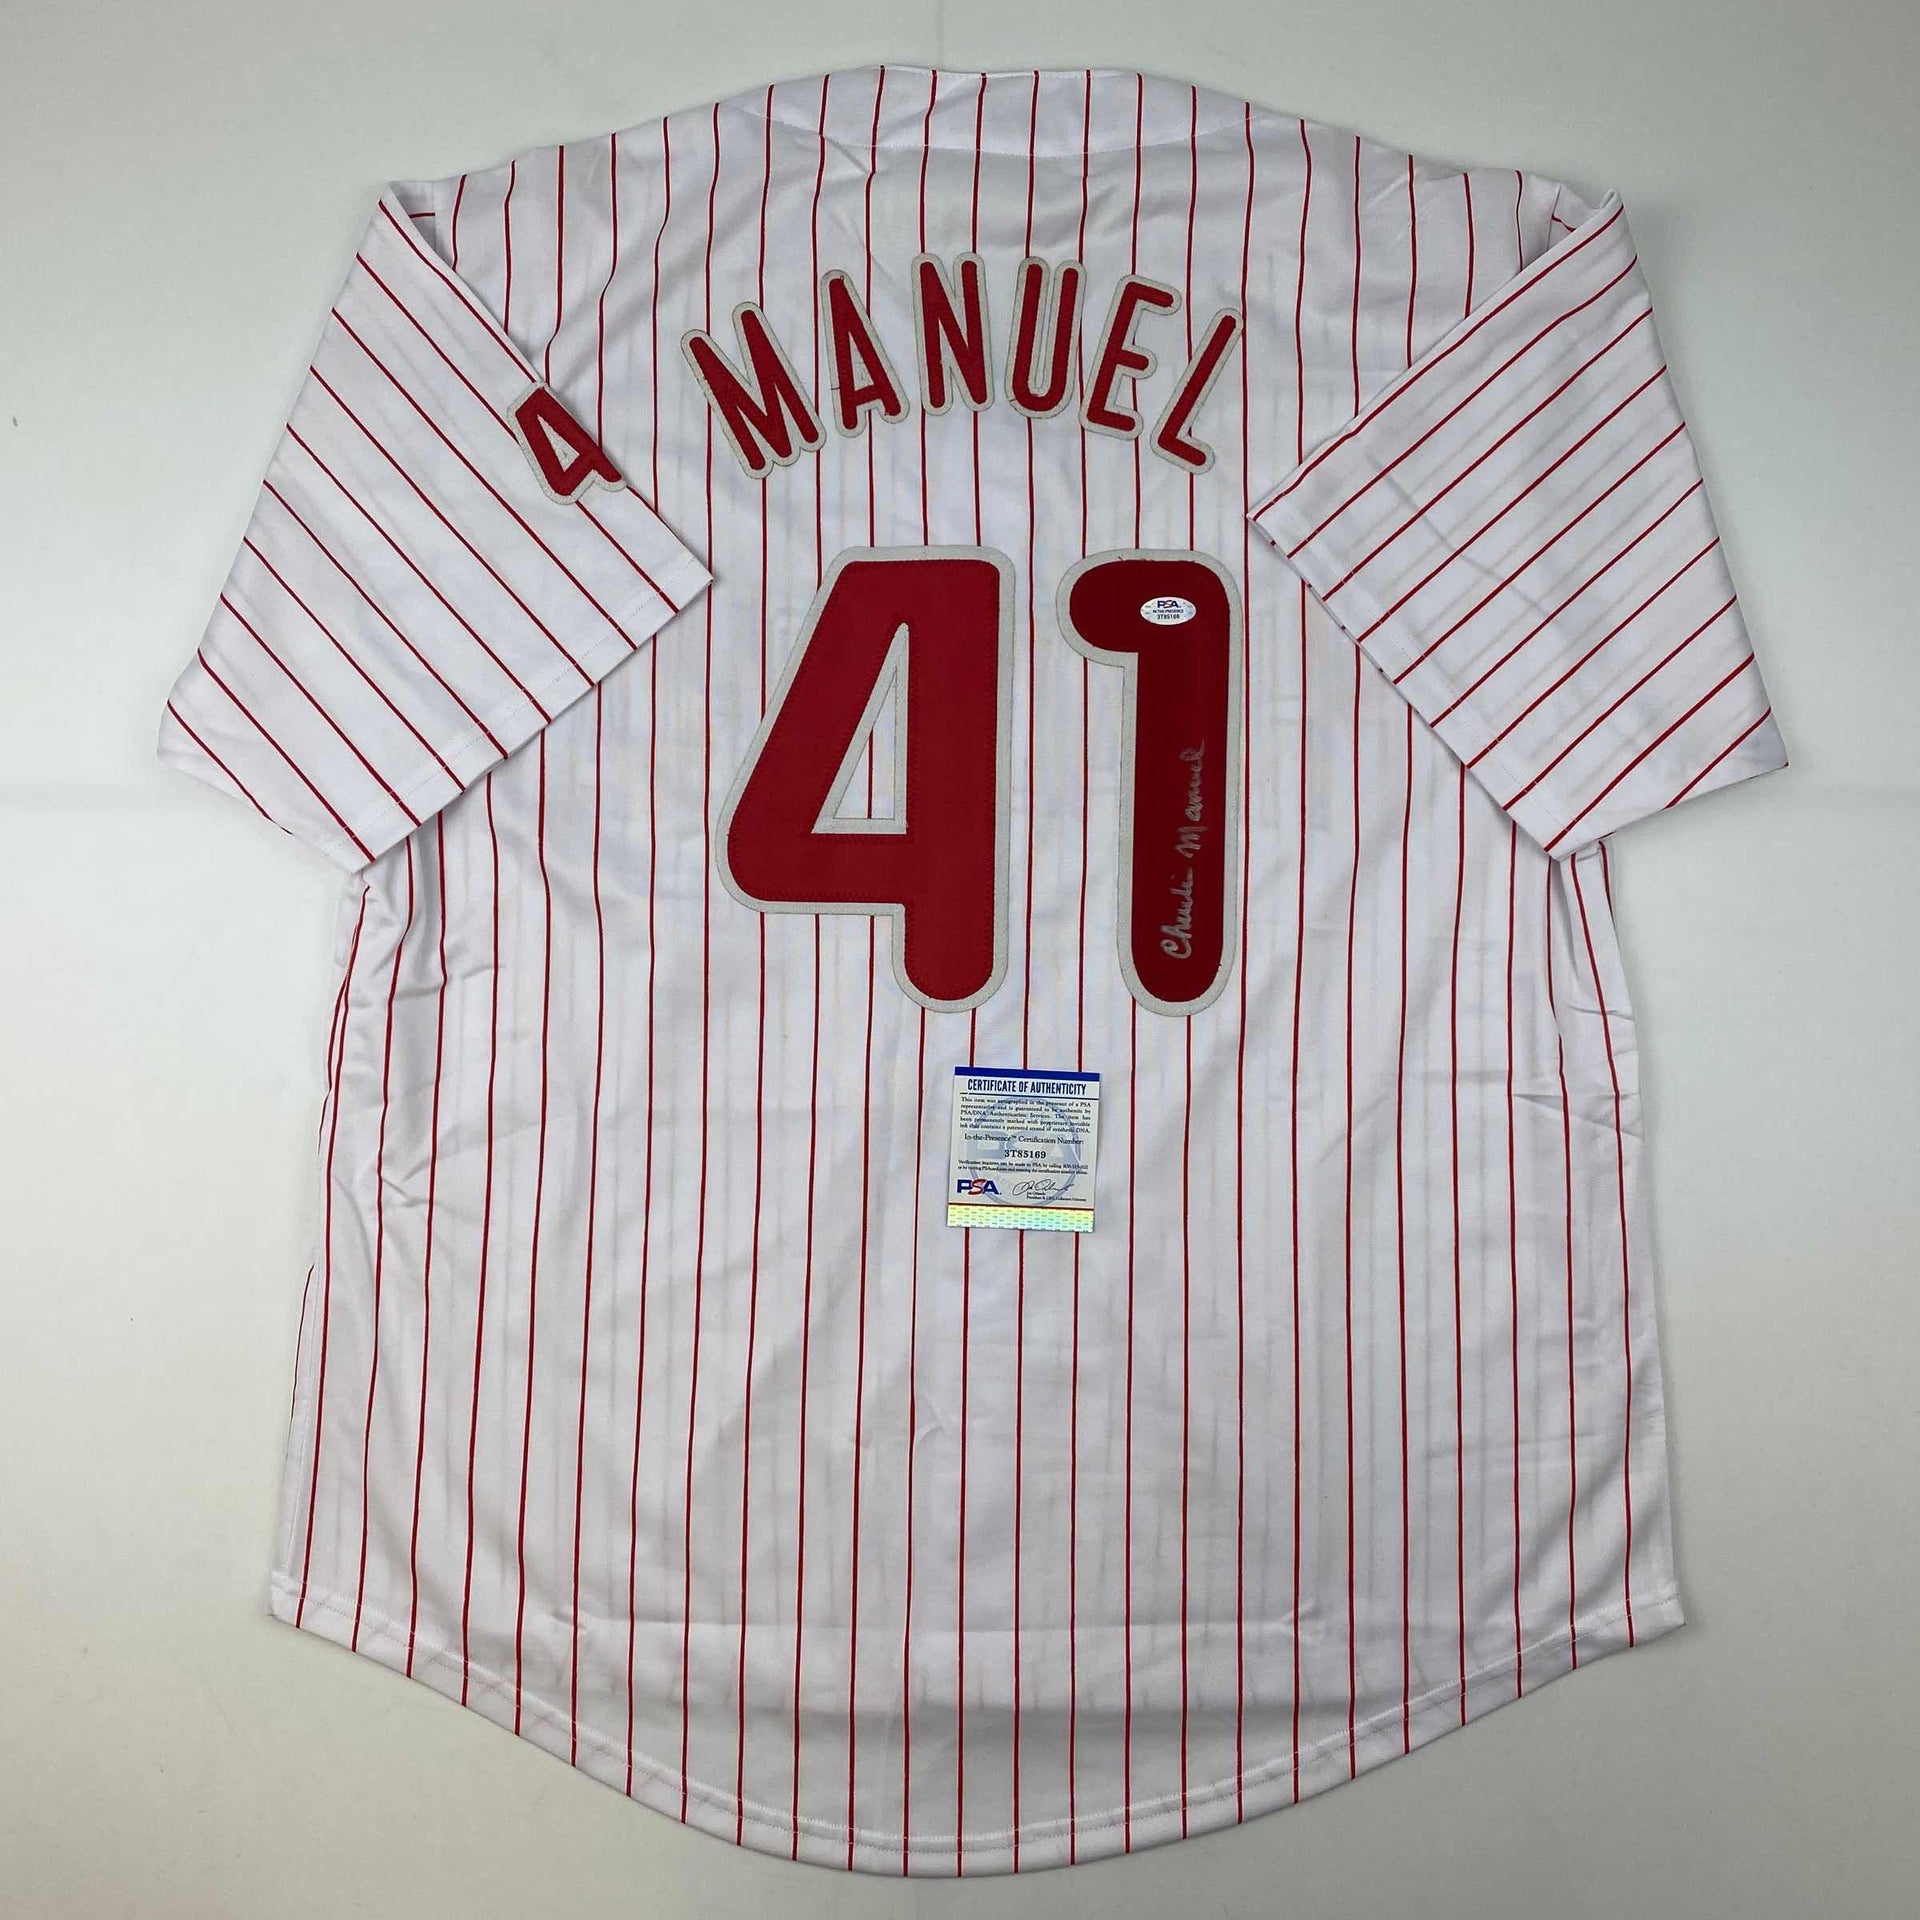 Autographed/Signed Charlie Manuel Philadelphia Pinstripe Baseball Jersey  PSA/DNA COA - Hall of Fame Sports Memorabilia